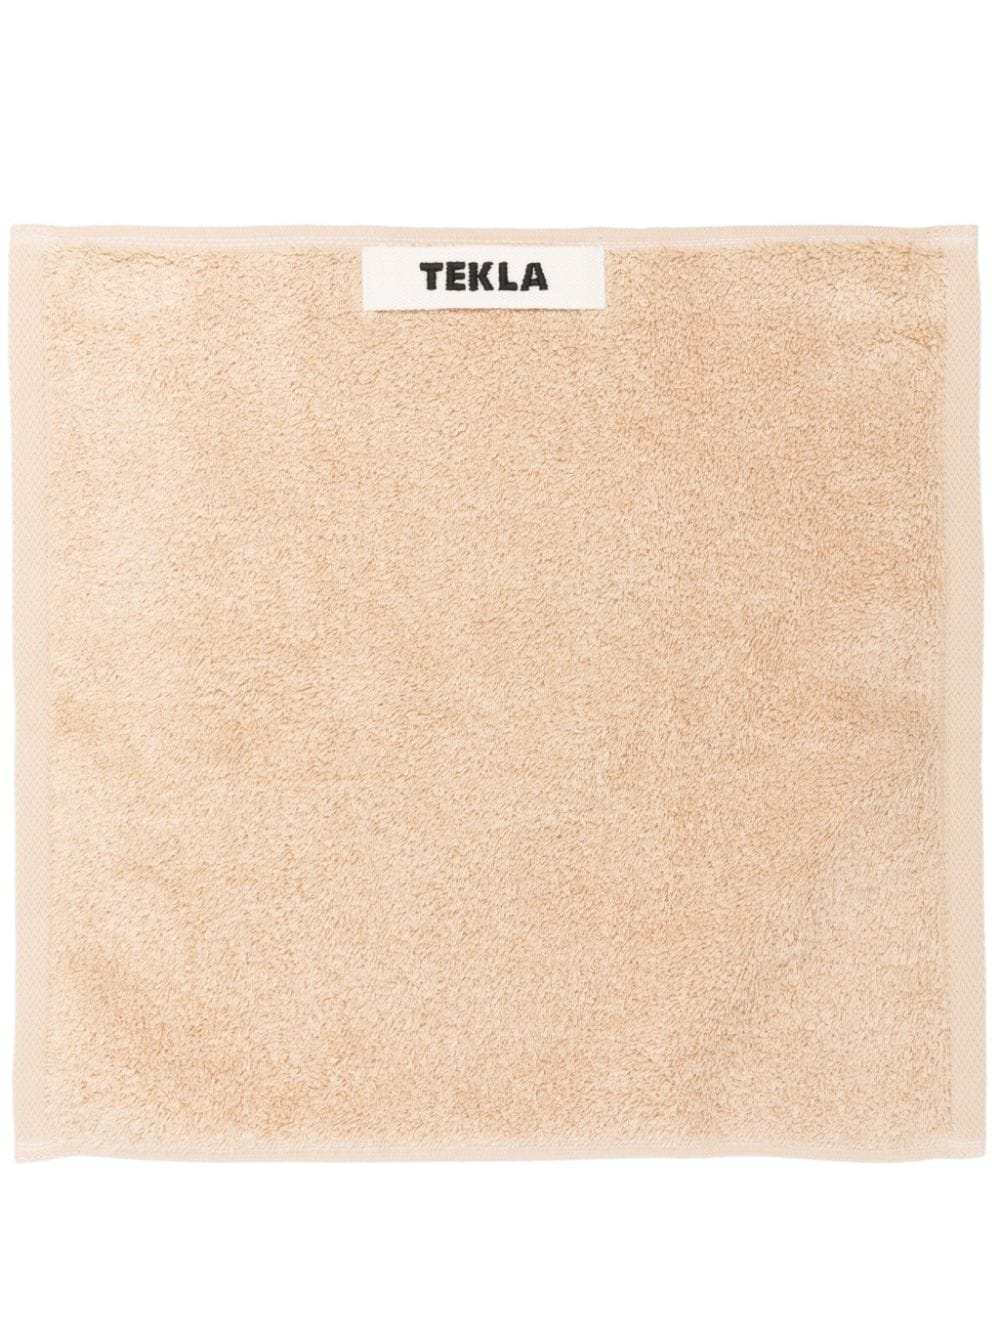 TEKLA organic cotton towel (30cmx30cm) - Neutrals von TEKLA